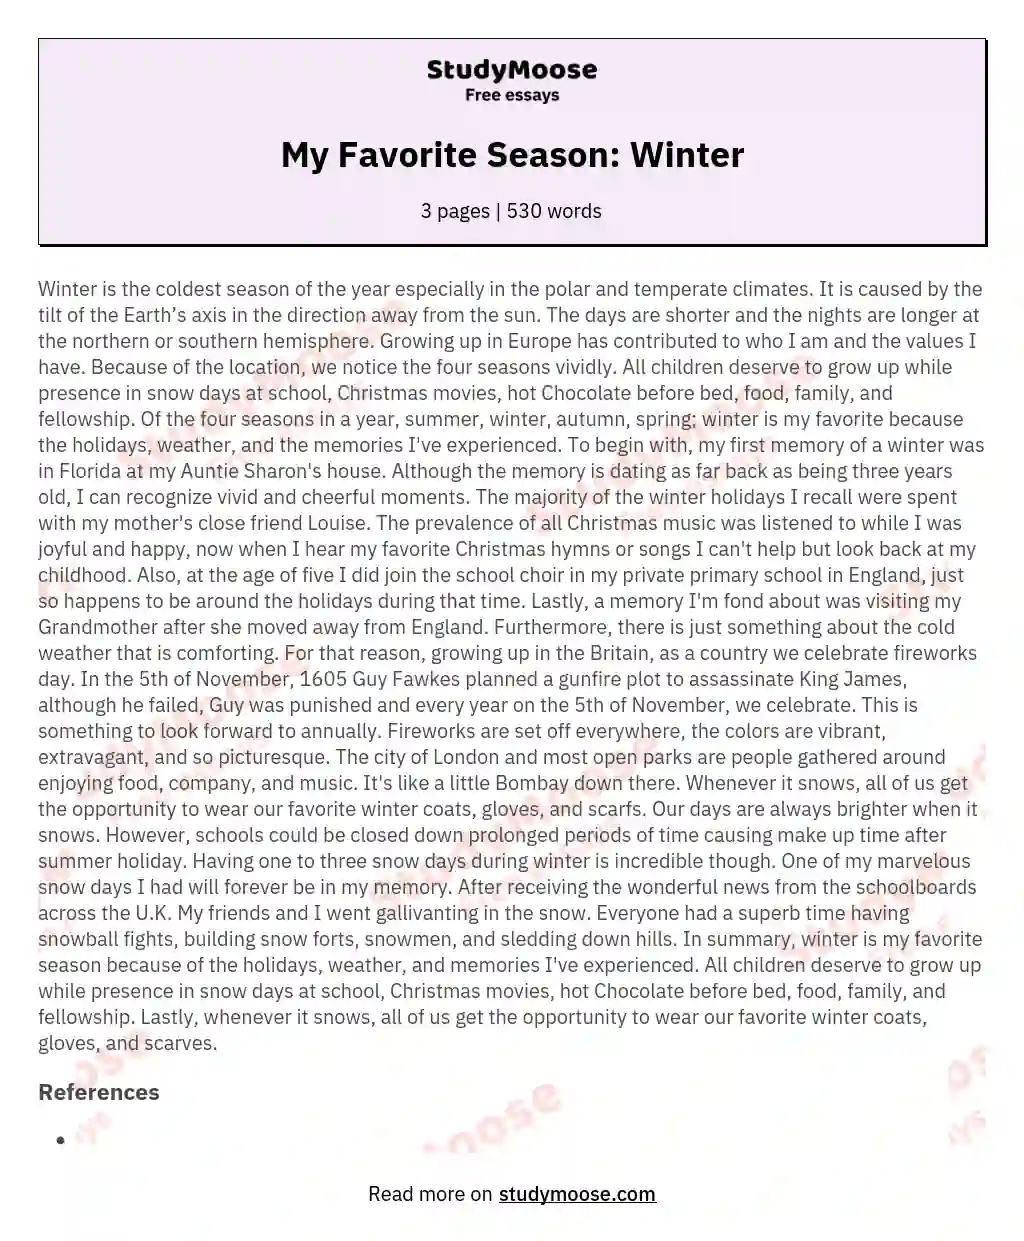 My Favorite Season: Winter essay